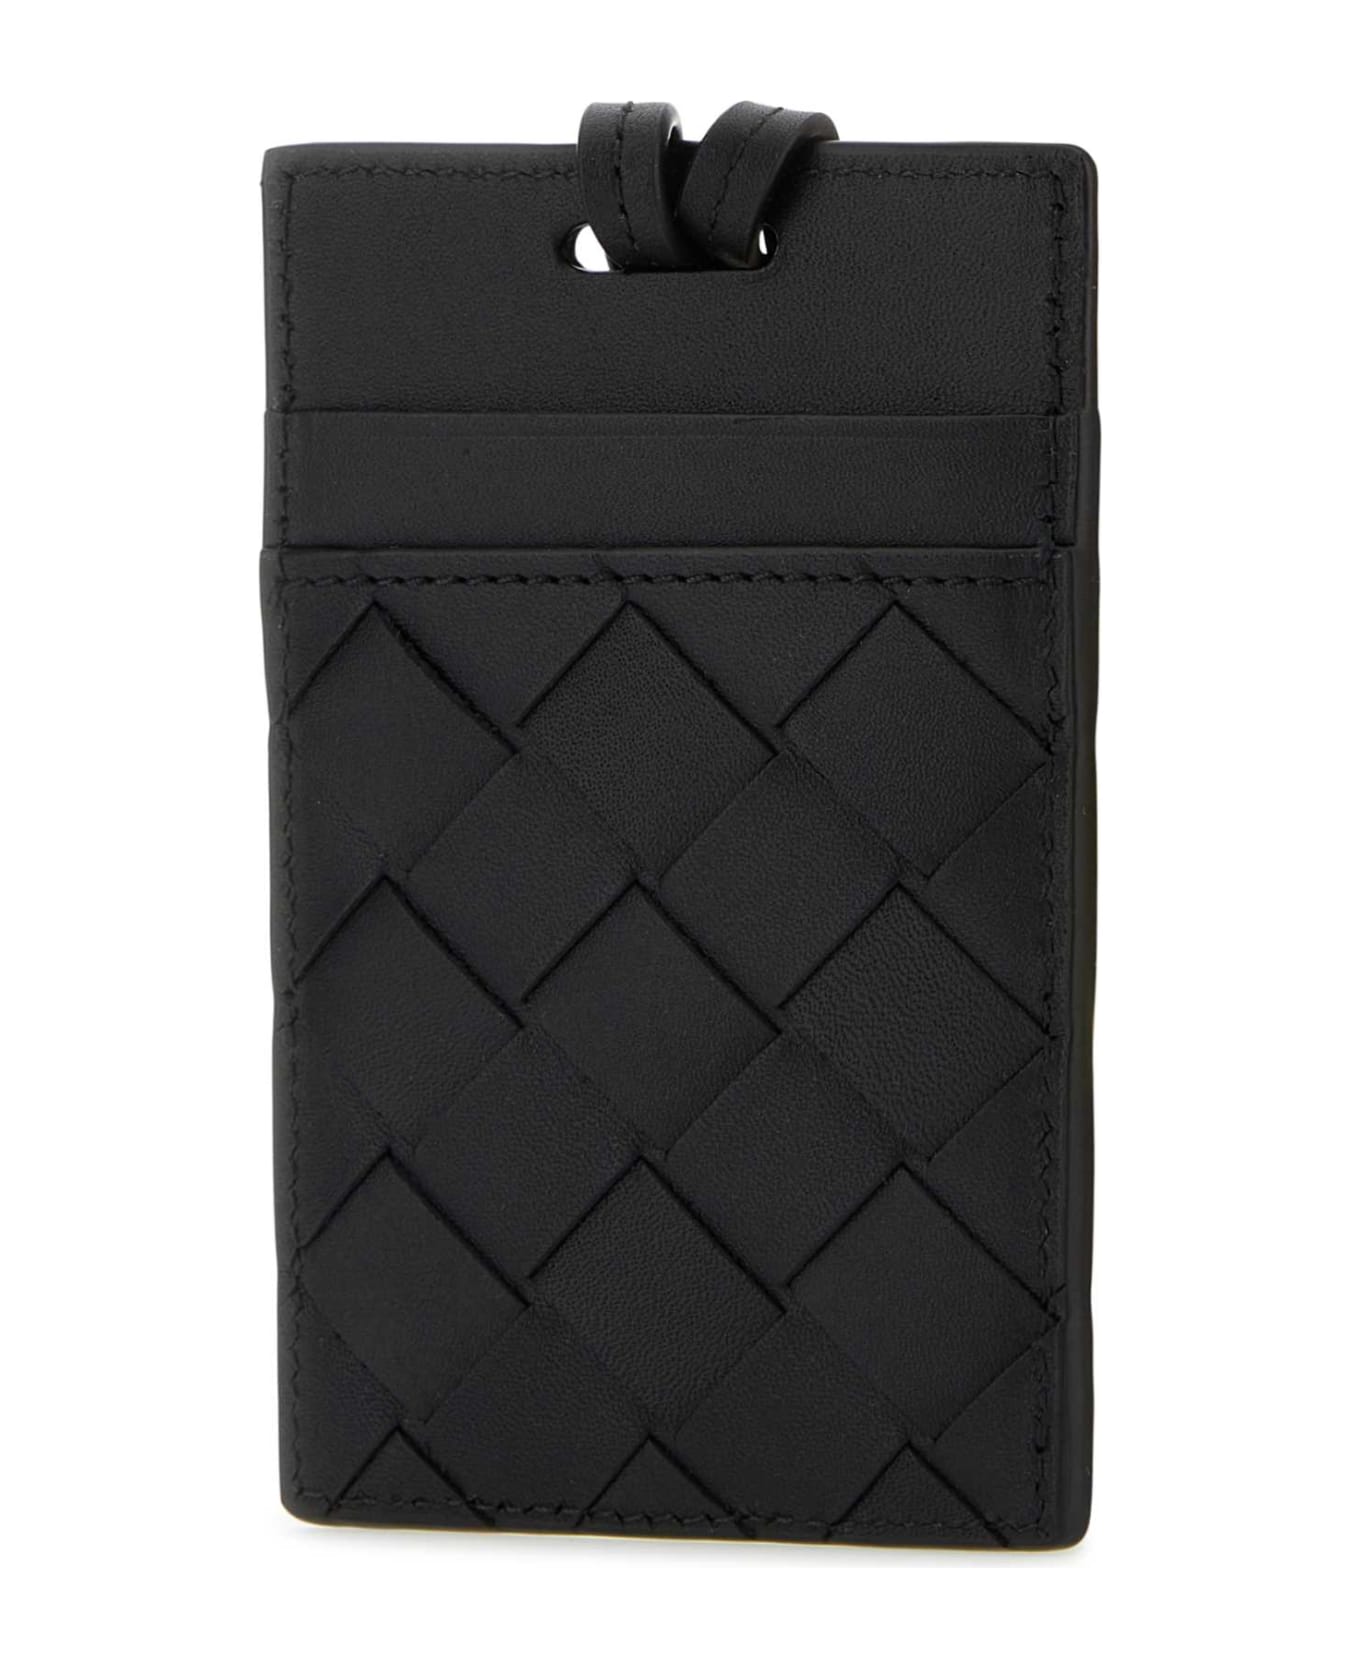 Bottega Veneta Black Leather Card Holder - BLACKSILVER 財布